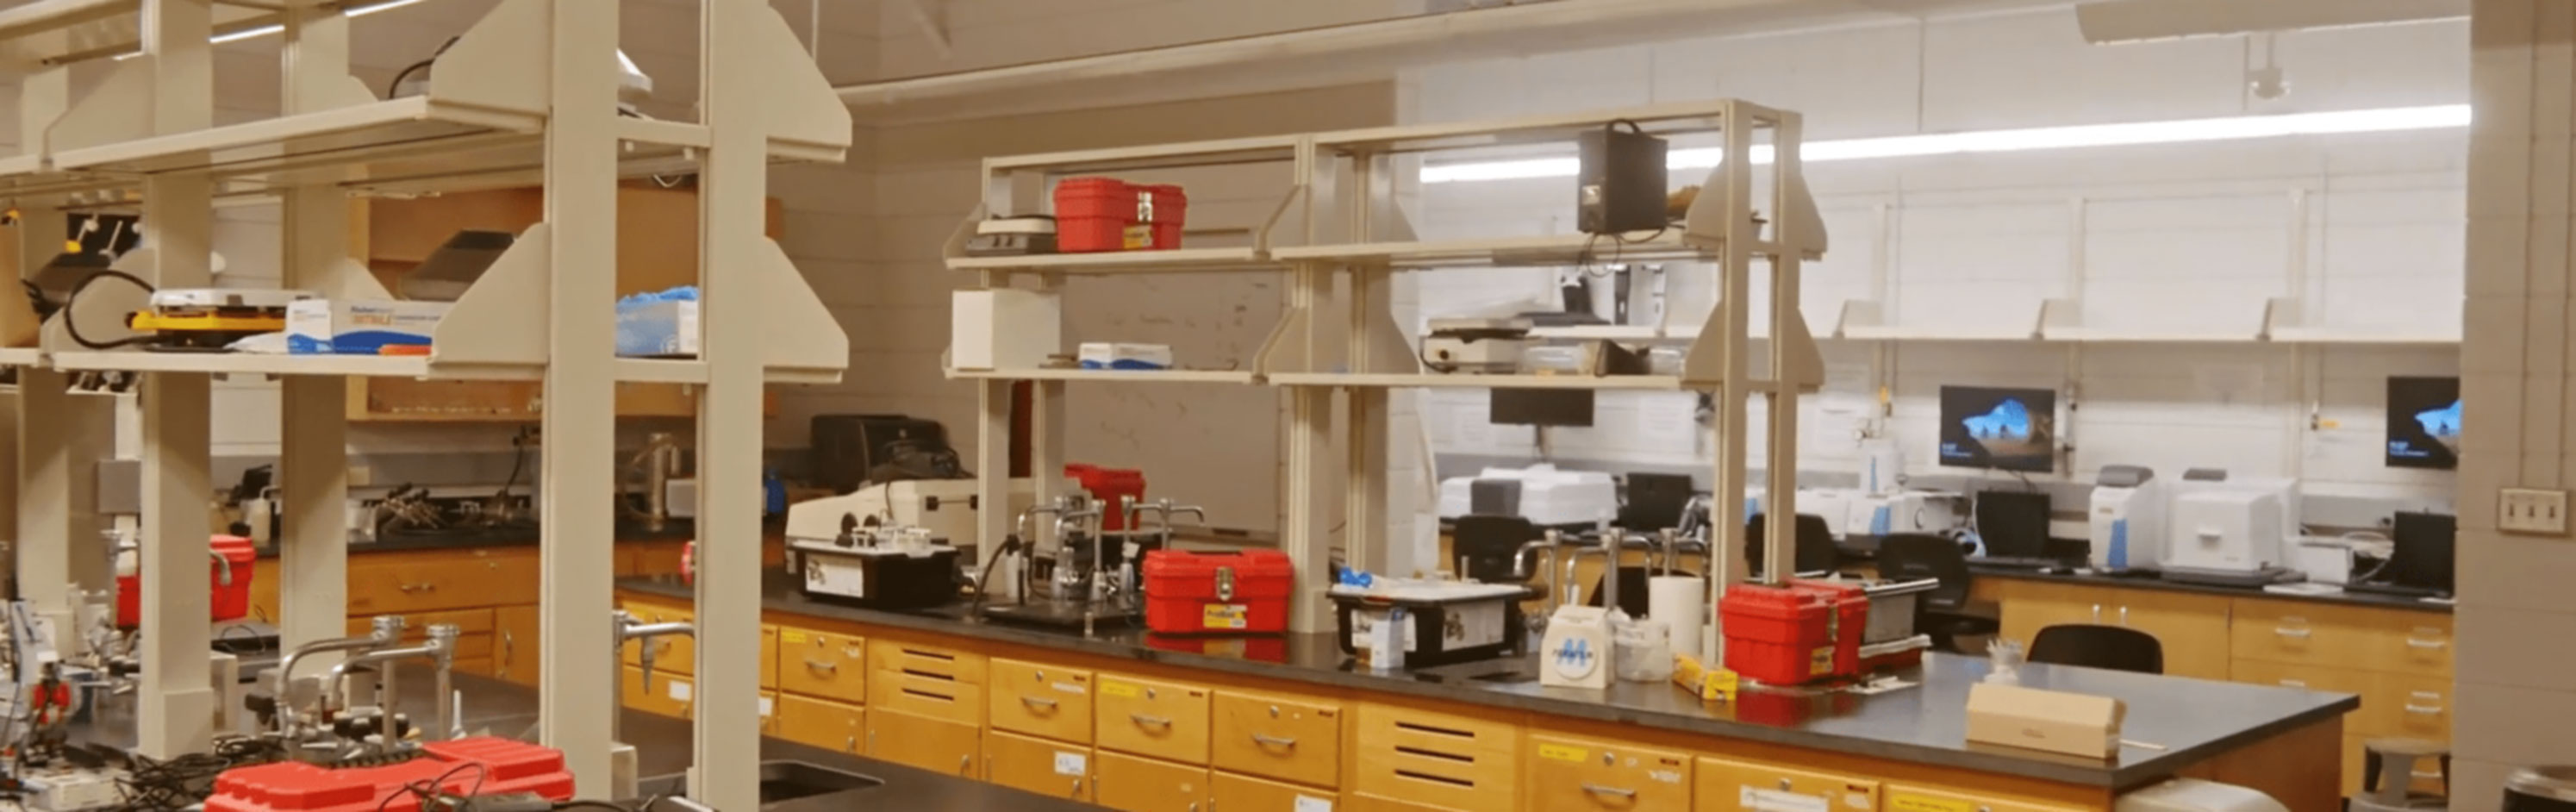 Laboratory and equipment inside it at UNI